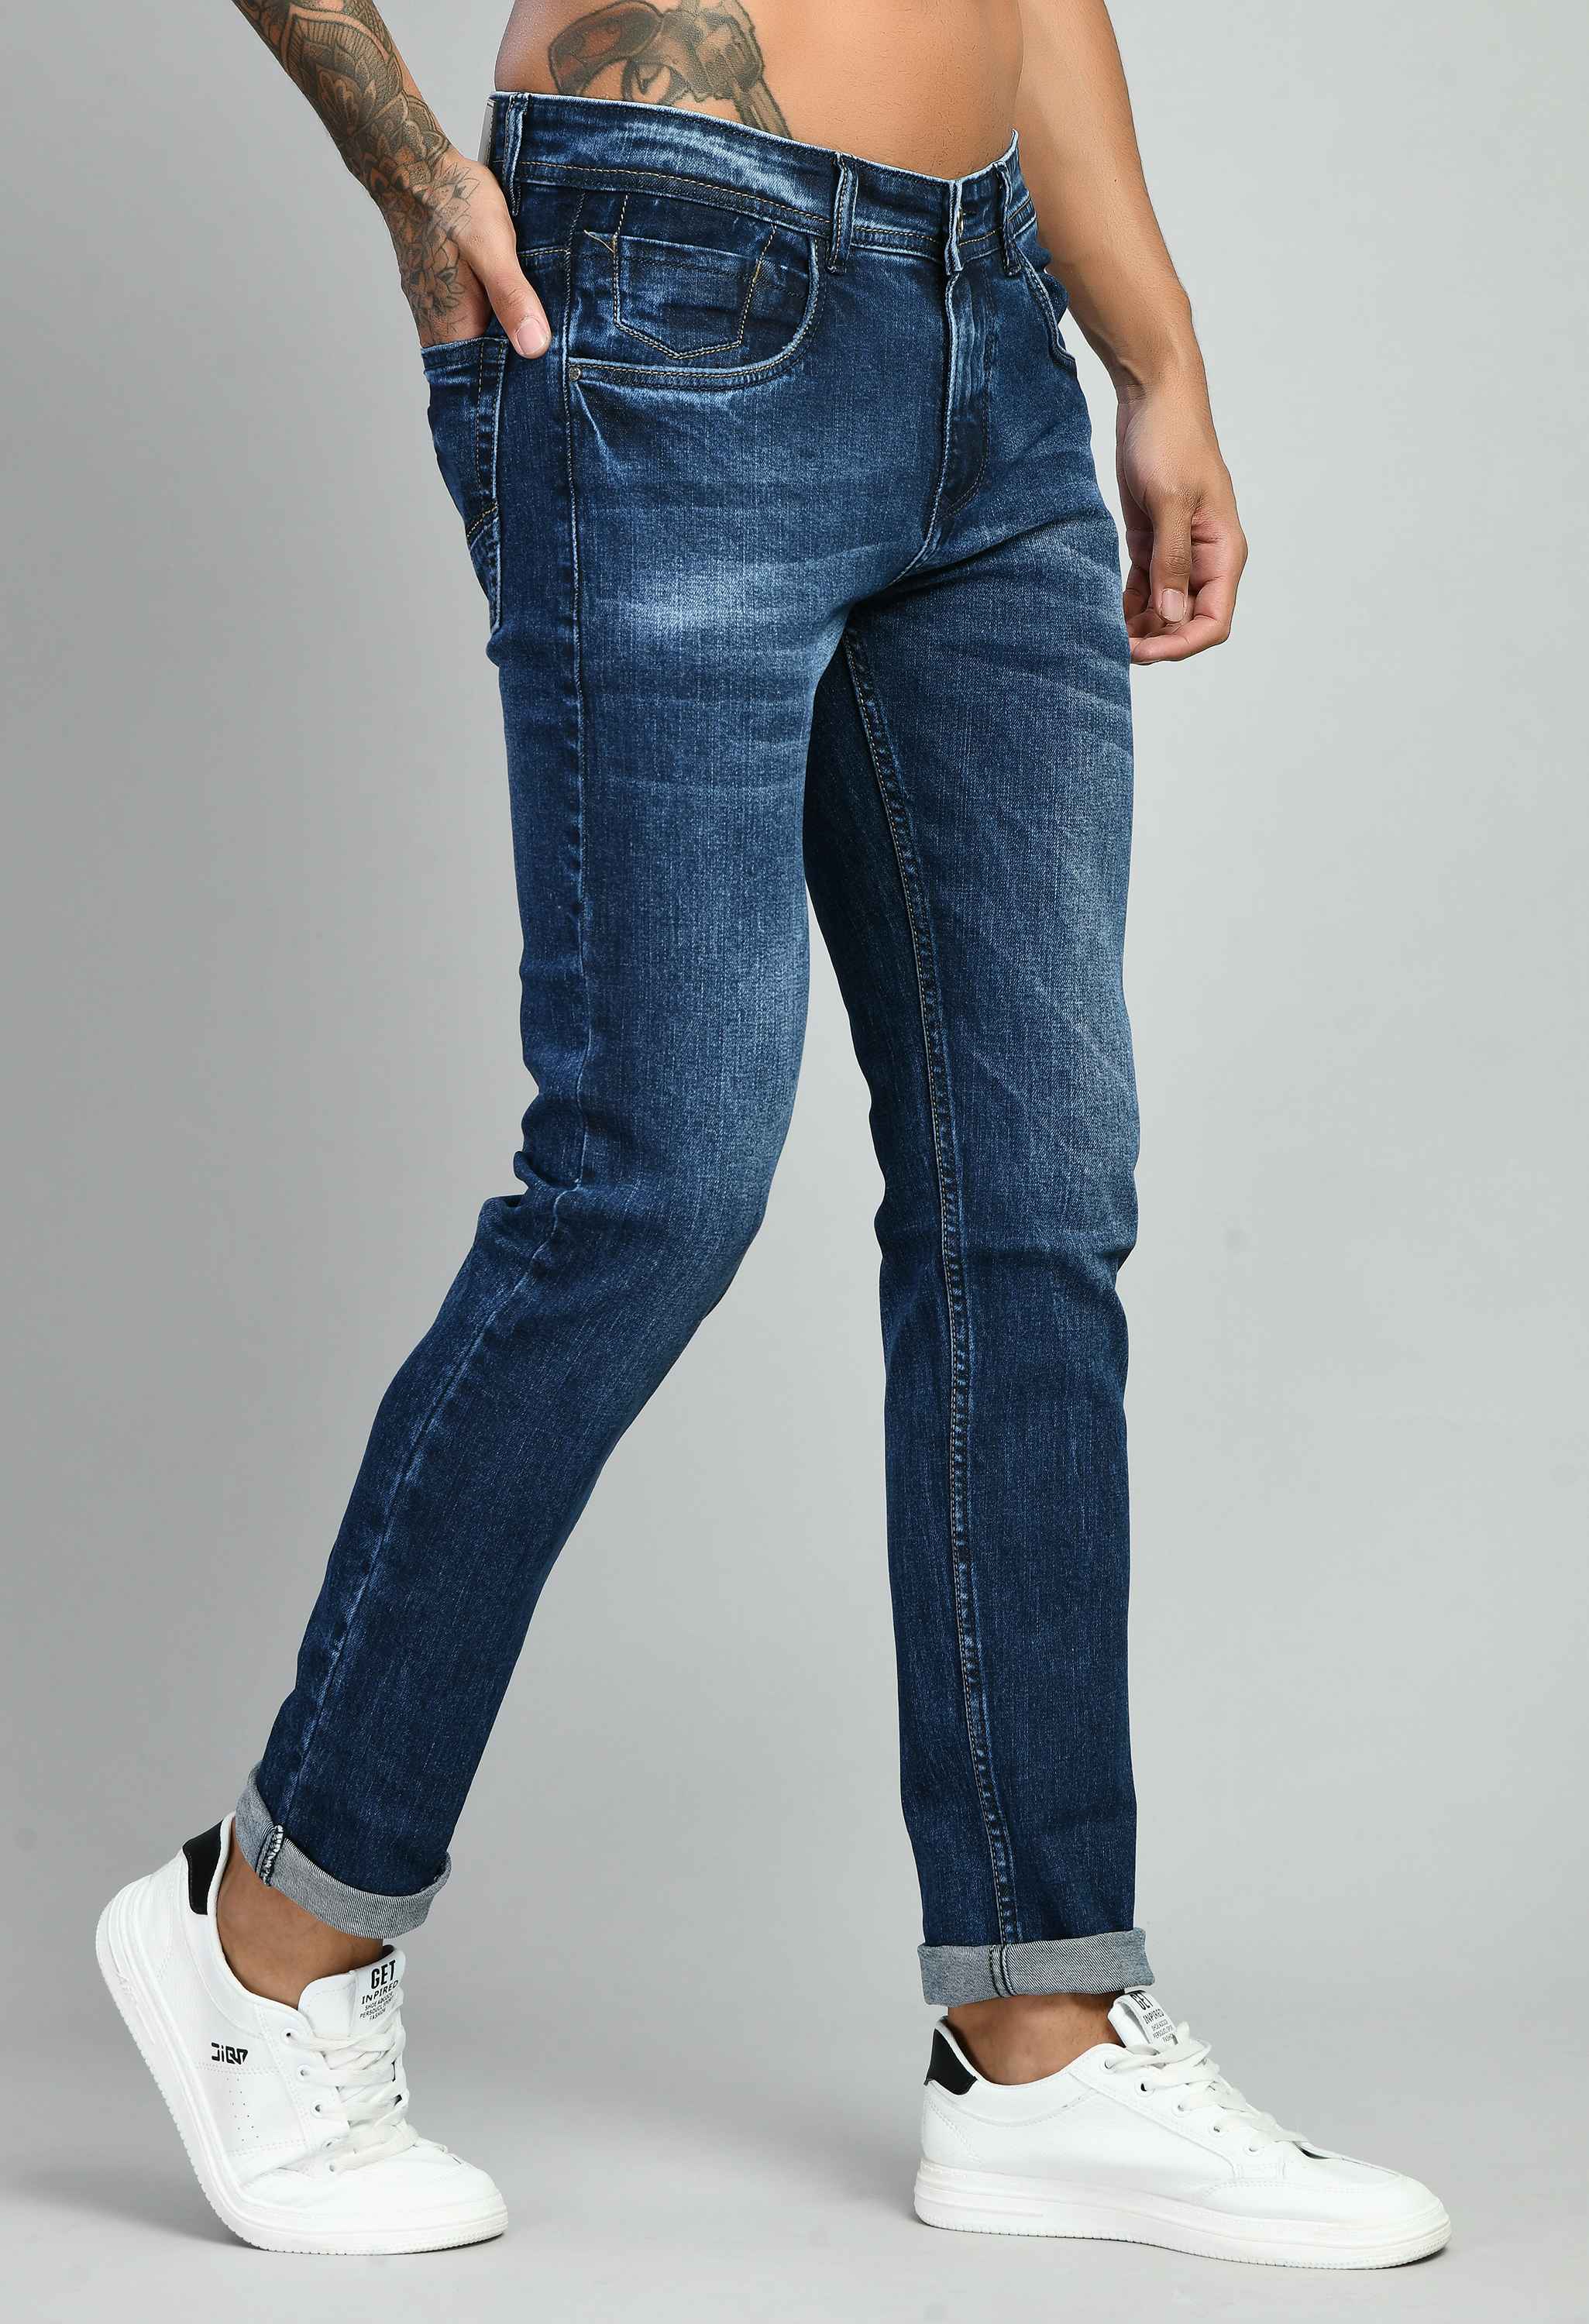 Men's Blue Flat Finish Straight Fit Jeans